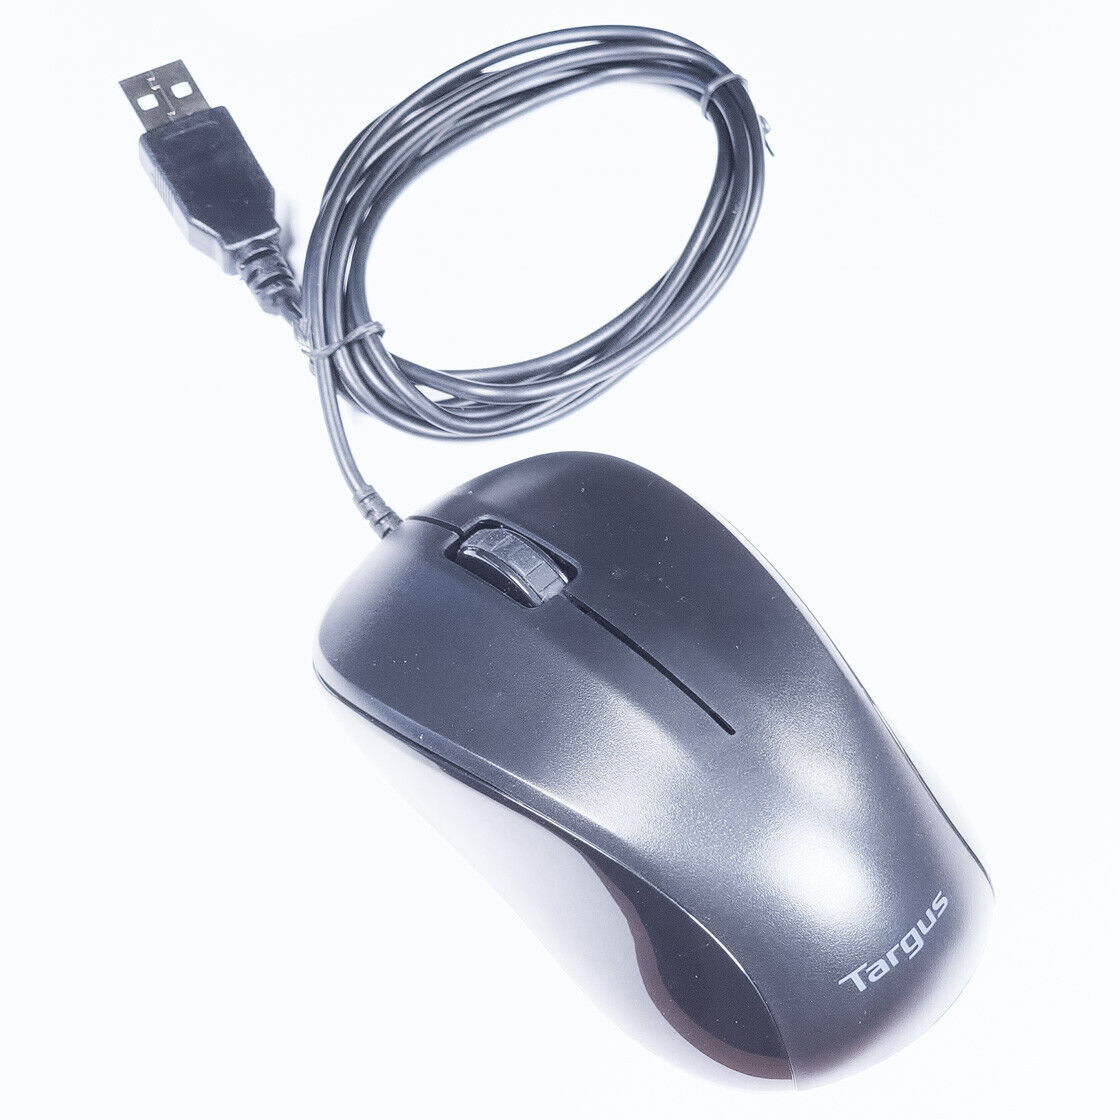 Targus AMU650 Computer Mouse 3-Button Optical Sensor USB Wired Laptop Desktop